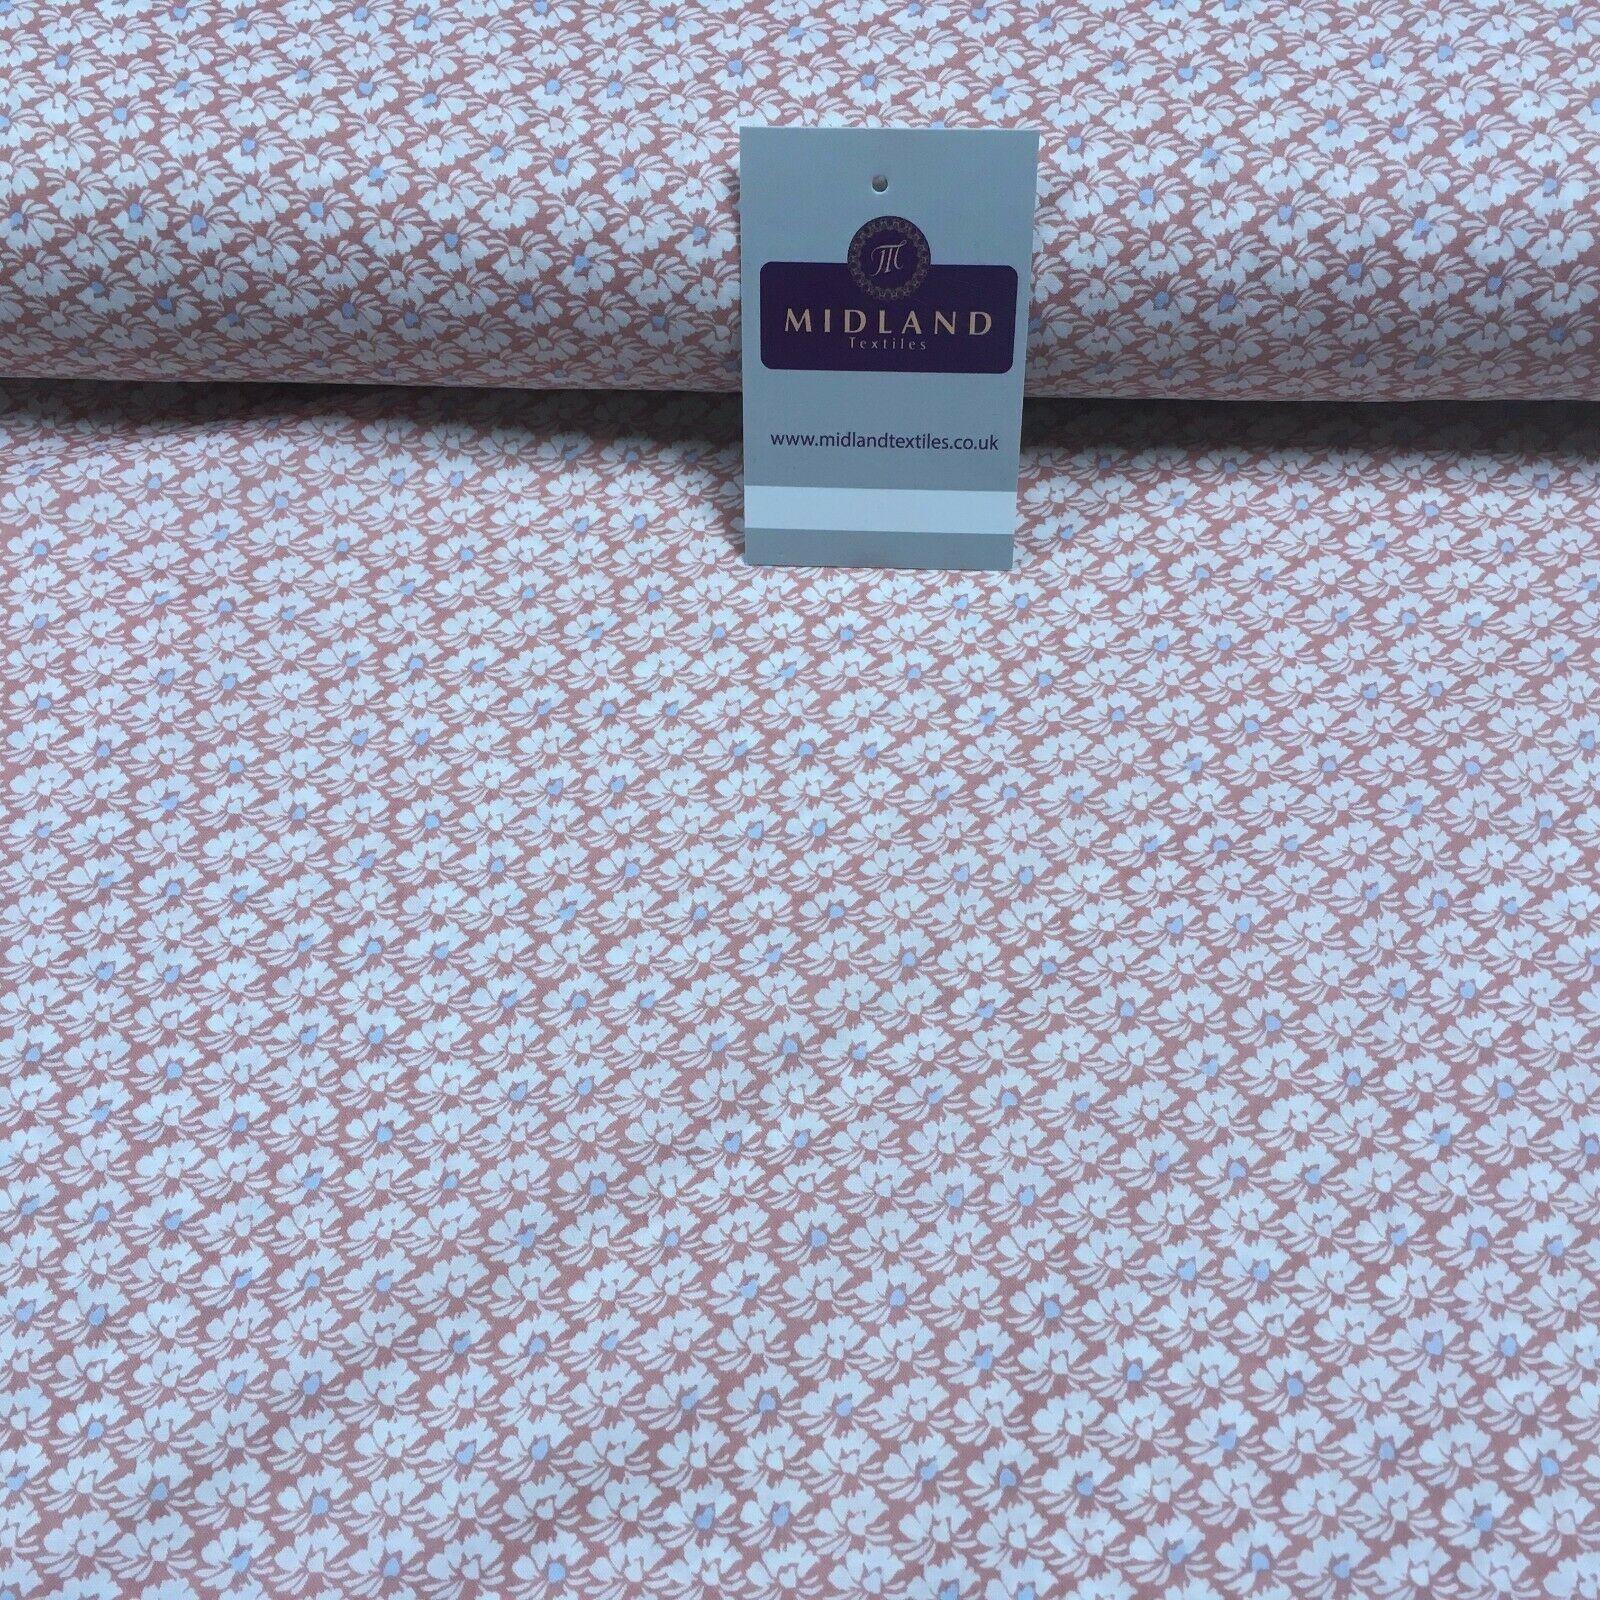 Peach Floral Ditsy Print Cotton Lawn Dress Fabric 150 cm MK1265 Mtex